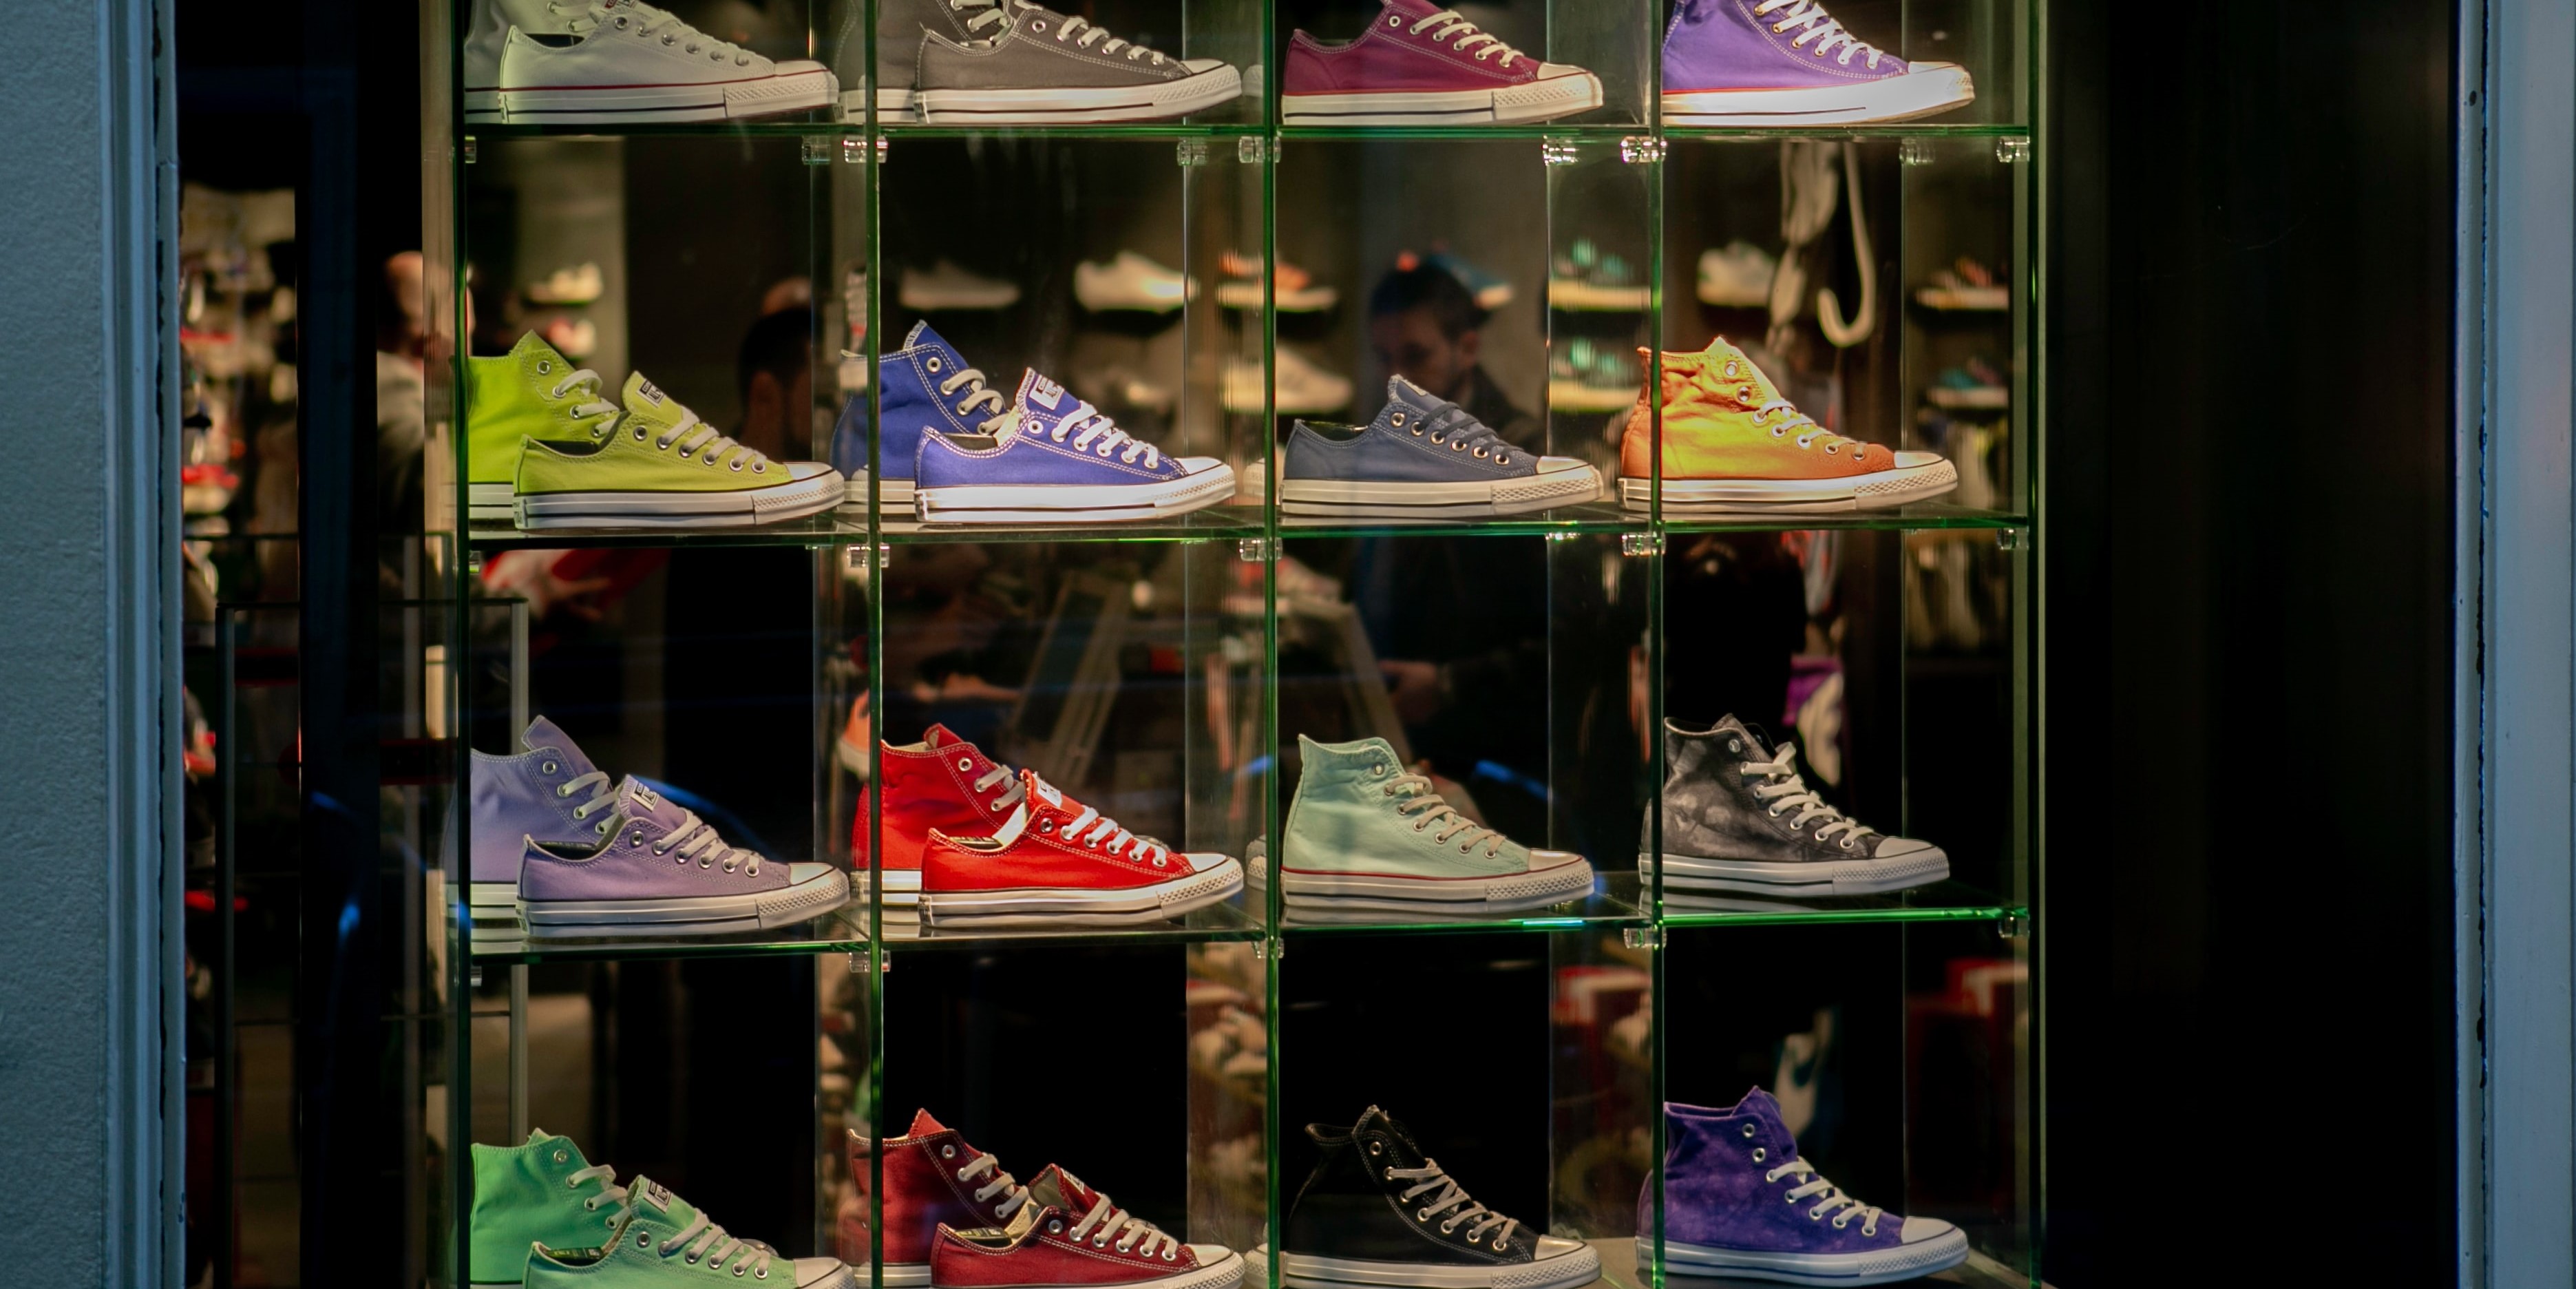 UK Footwear Brands - Digital Marketing Benchmark Report, Q4 2022 Published Today